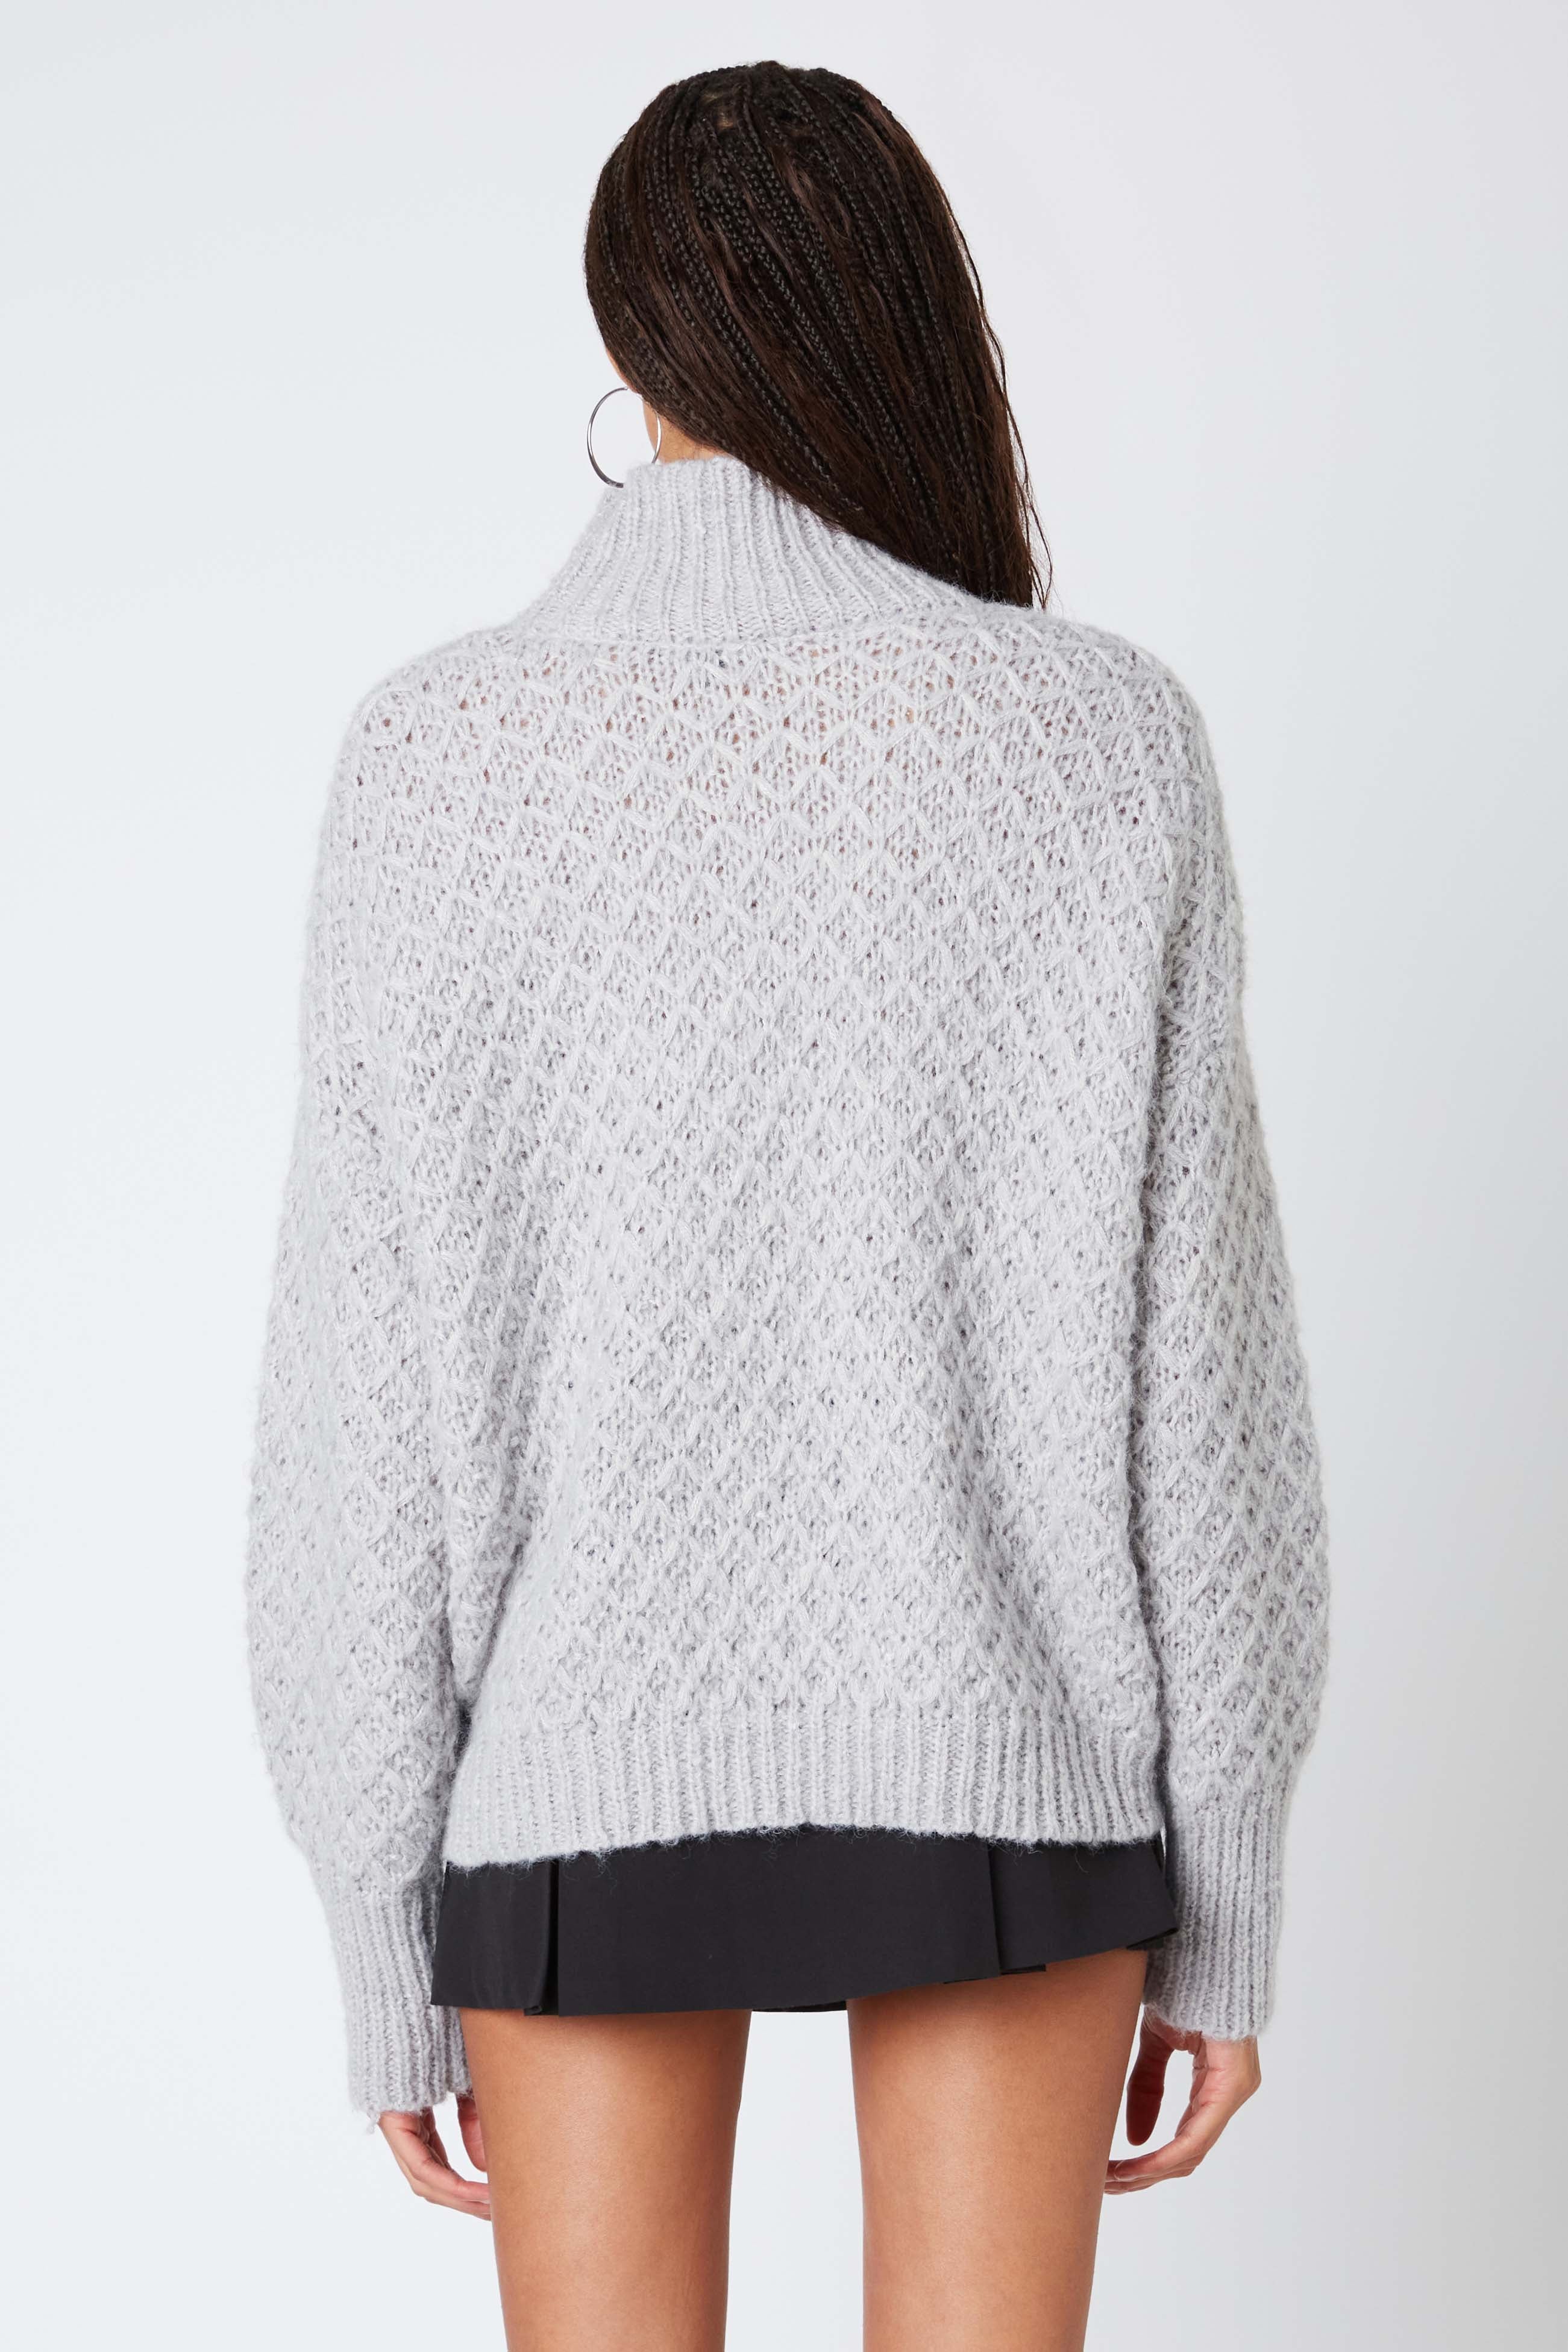 Knit Mockneck Sweater in Grey Back View